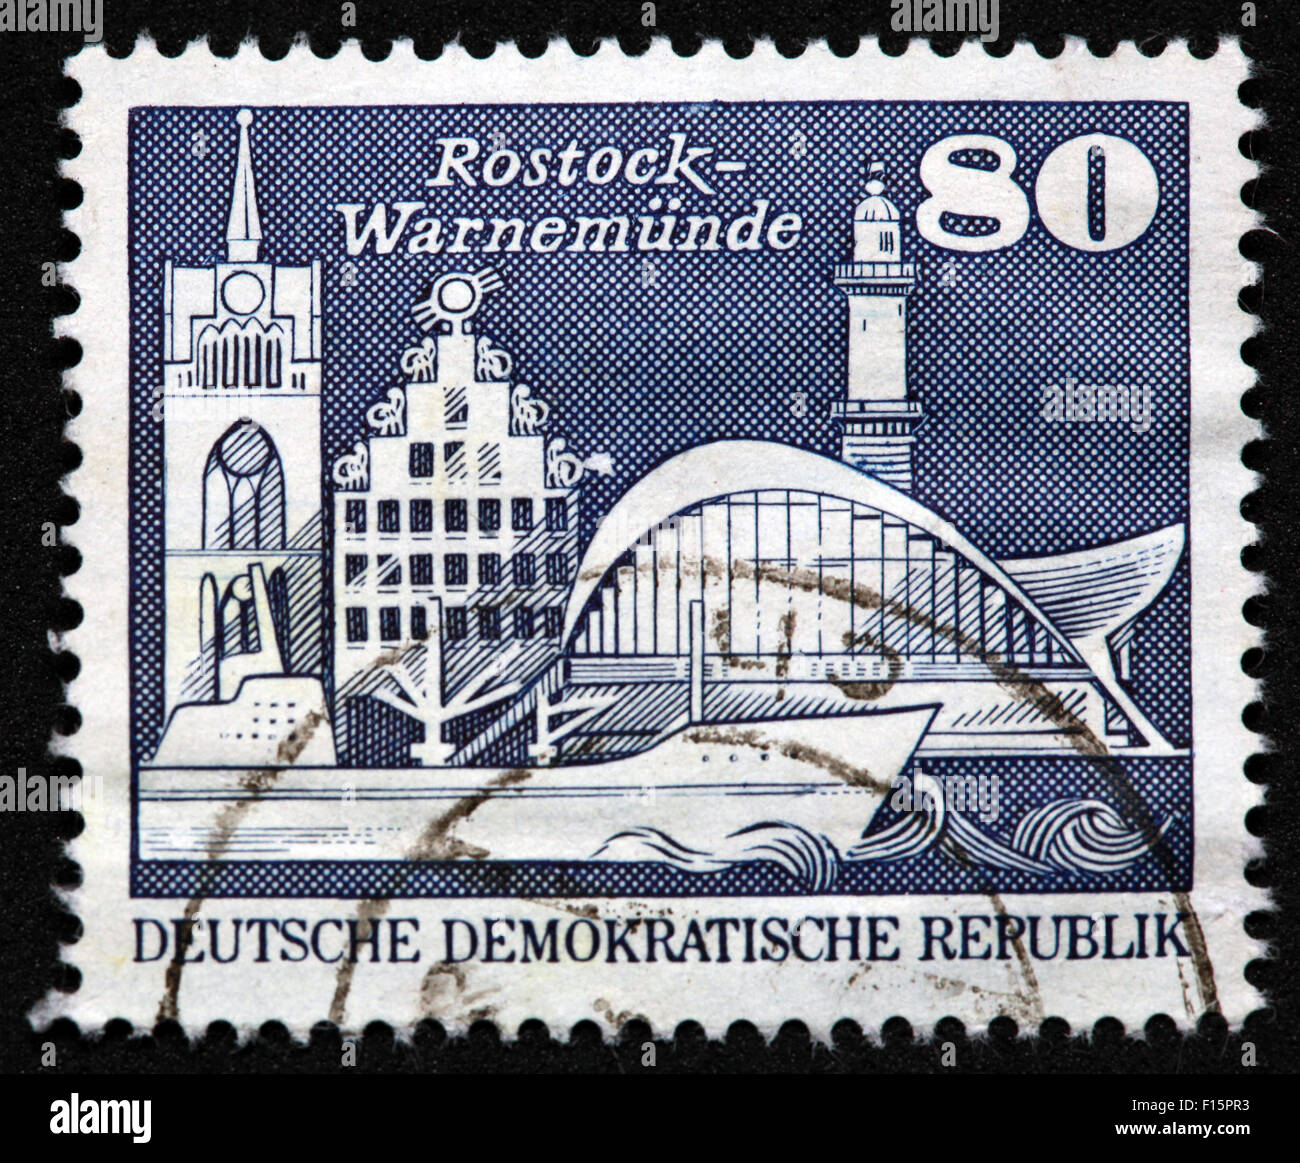 Deutsche Demokratische Republik 80 Rostock-Warnemunde DDR Stamp Banque D'Images